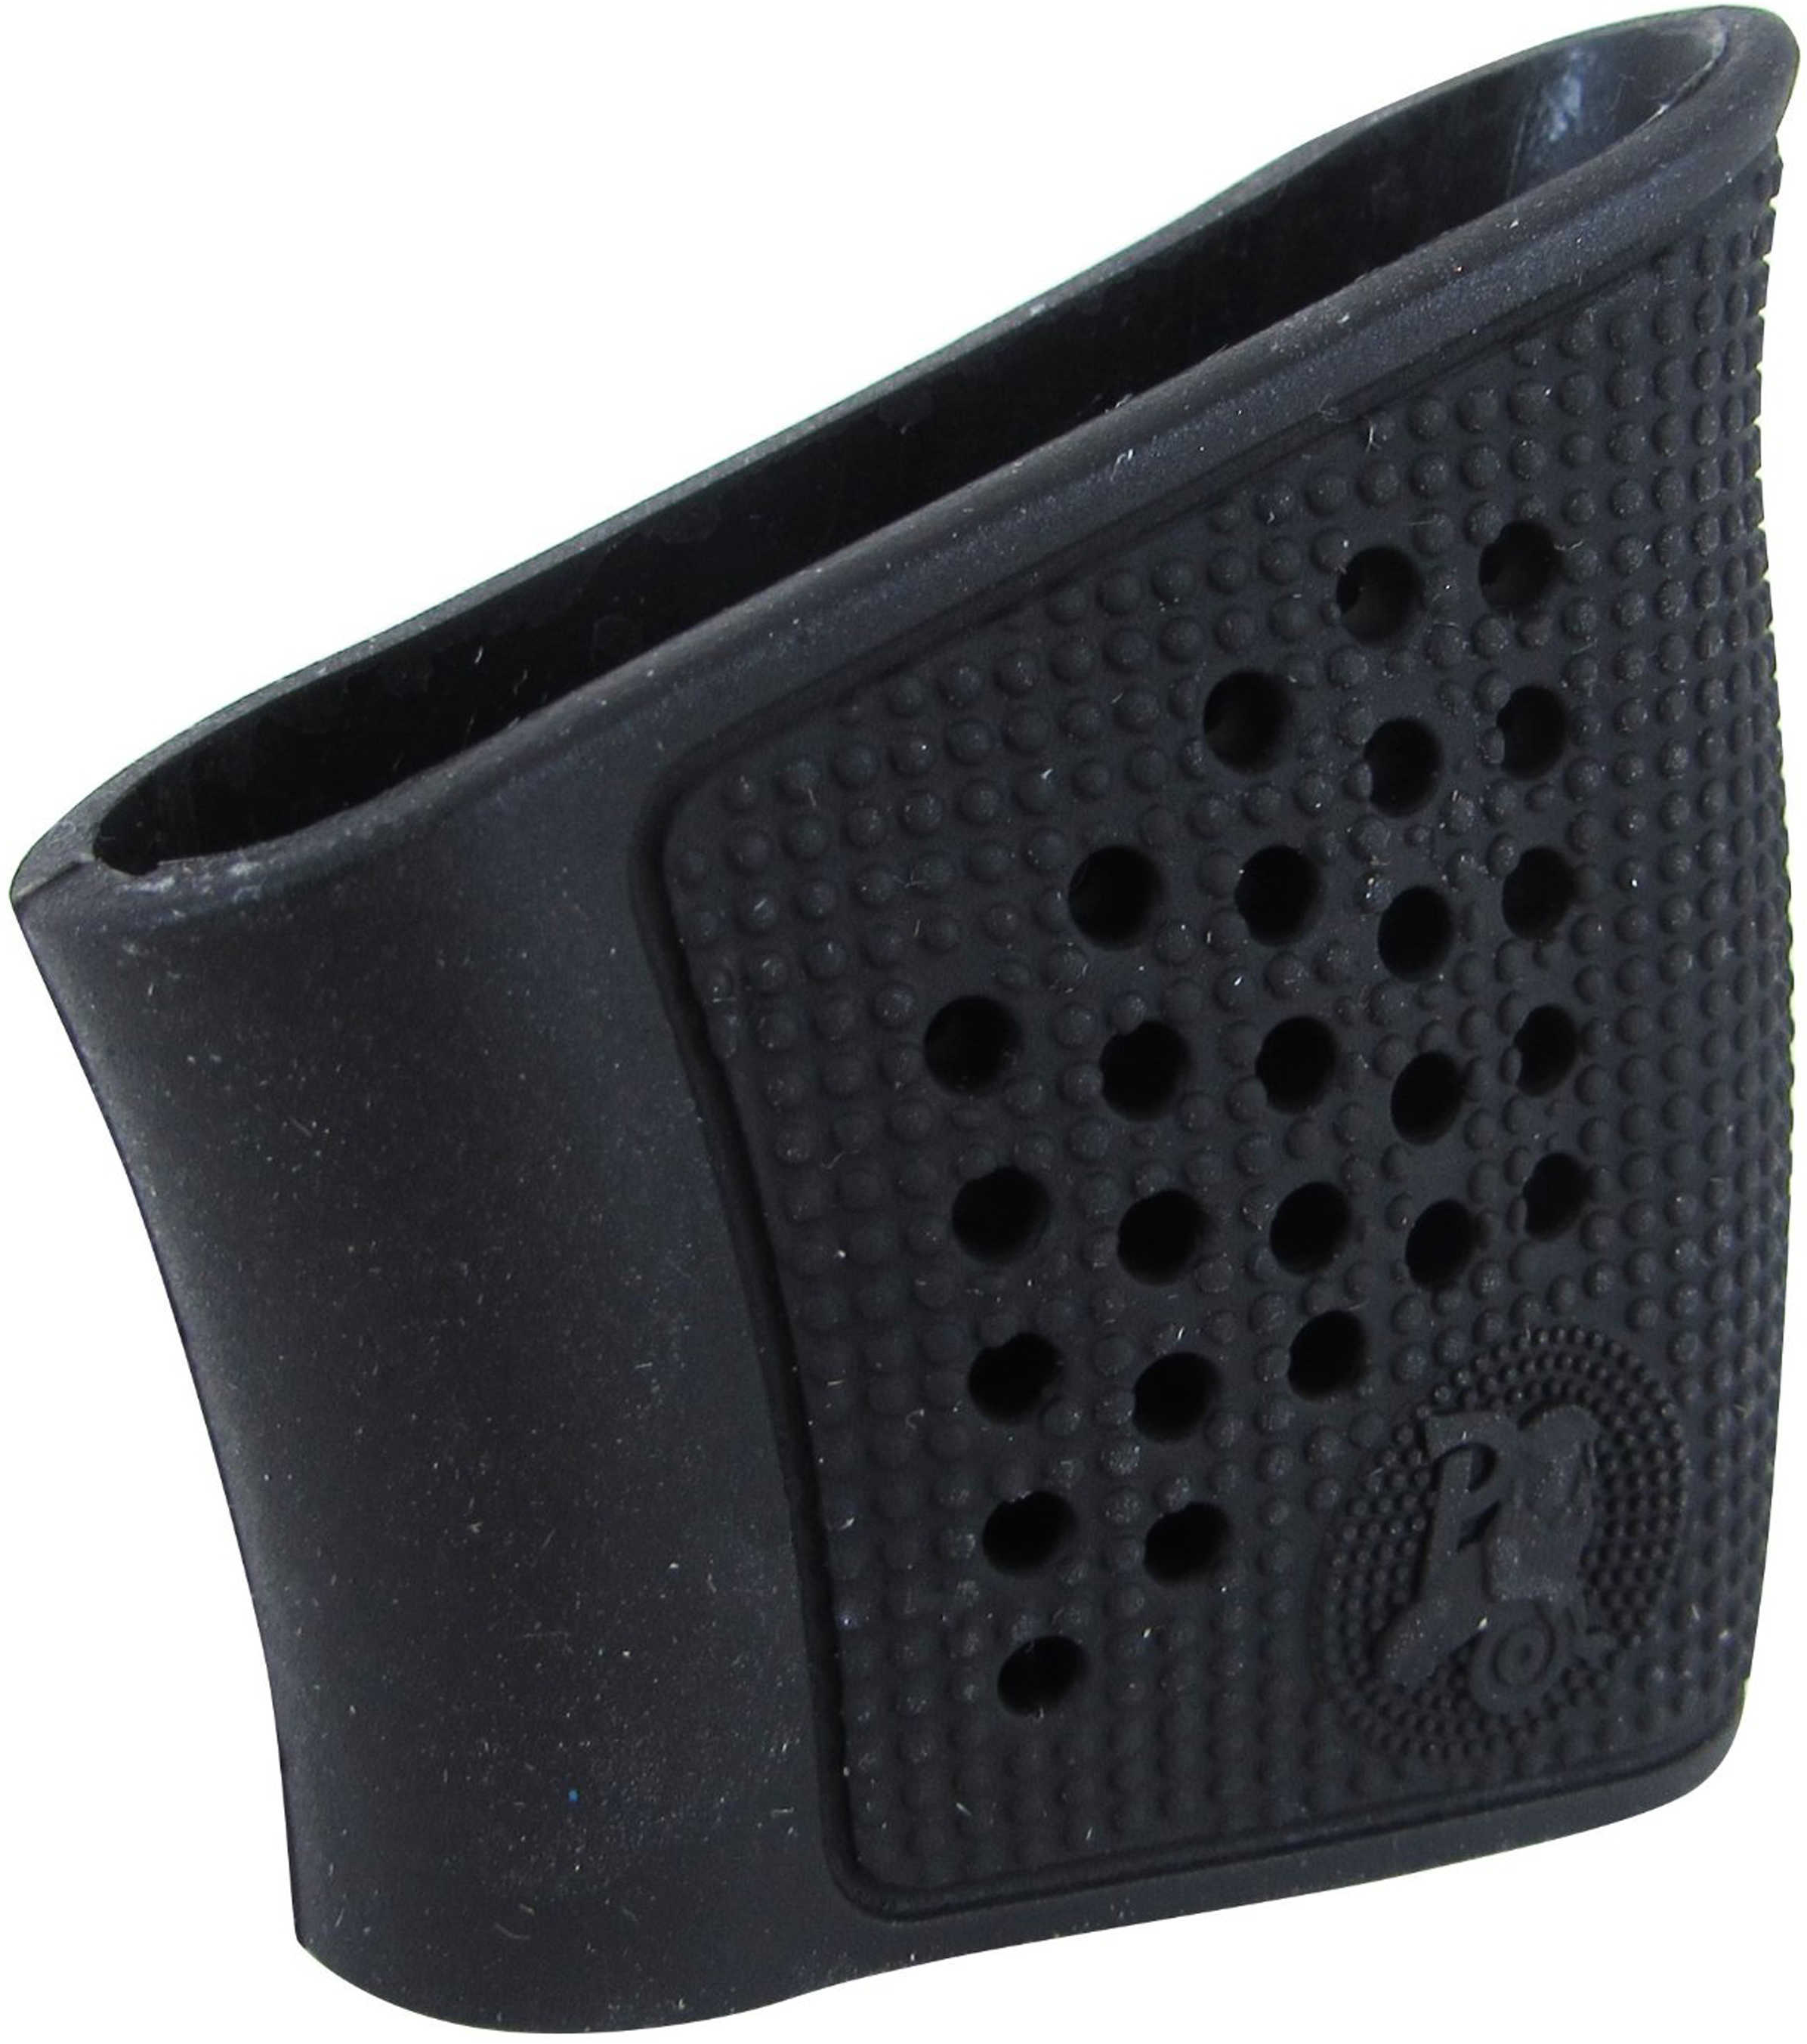 Pachmayr Grip Tactical Glove Black Slip-On Fits Glk 42 5161